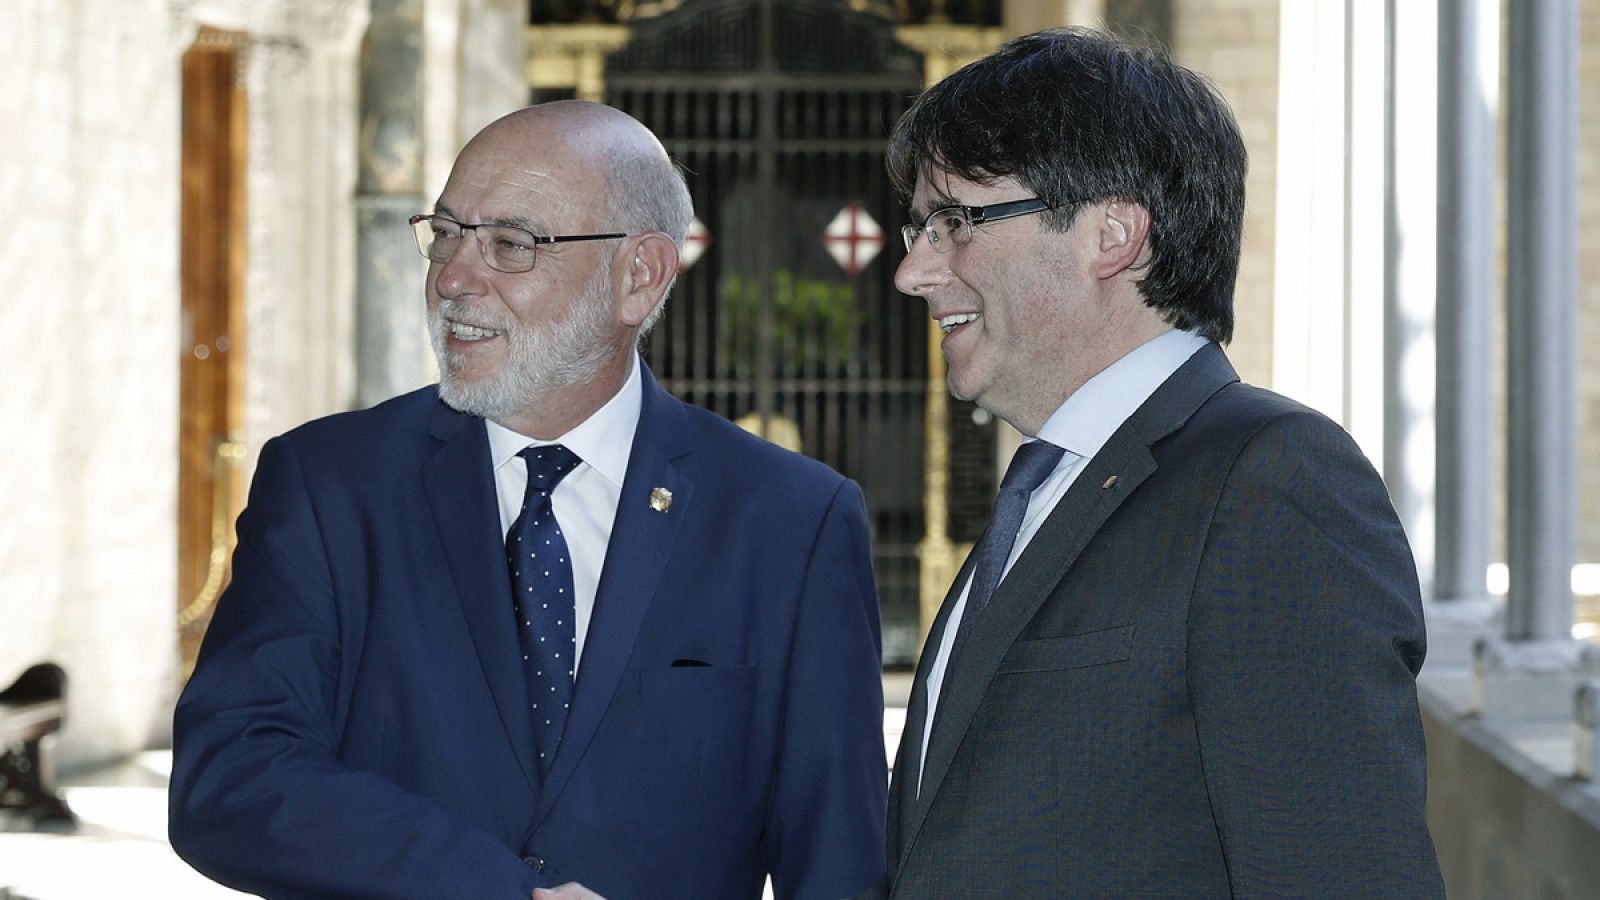 El presidente de la Generalitat, Carles Puigdemont, recibe al fiscal general del Estado, José Manuel Maza